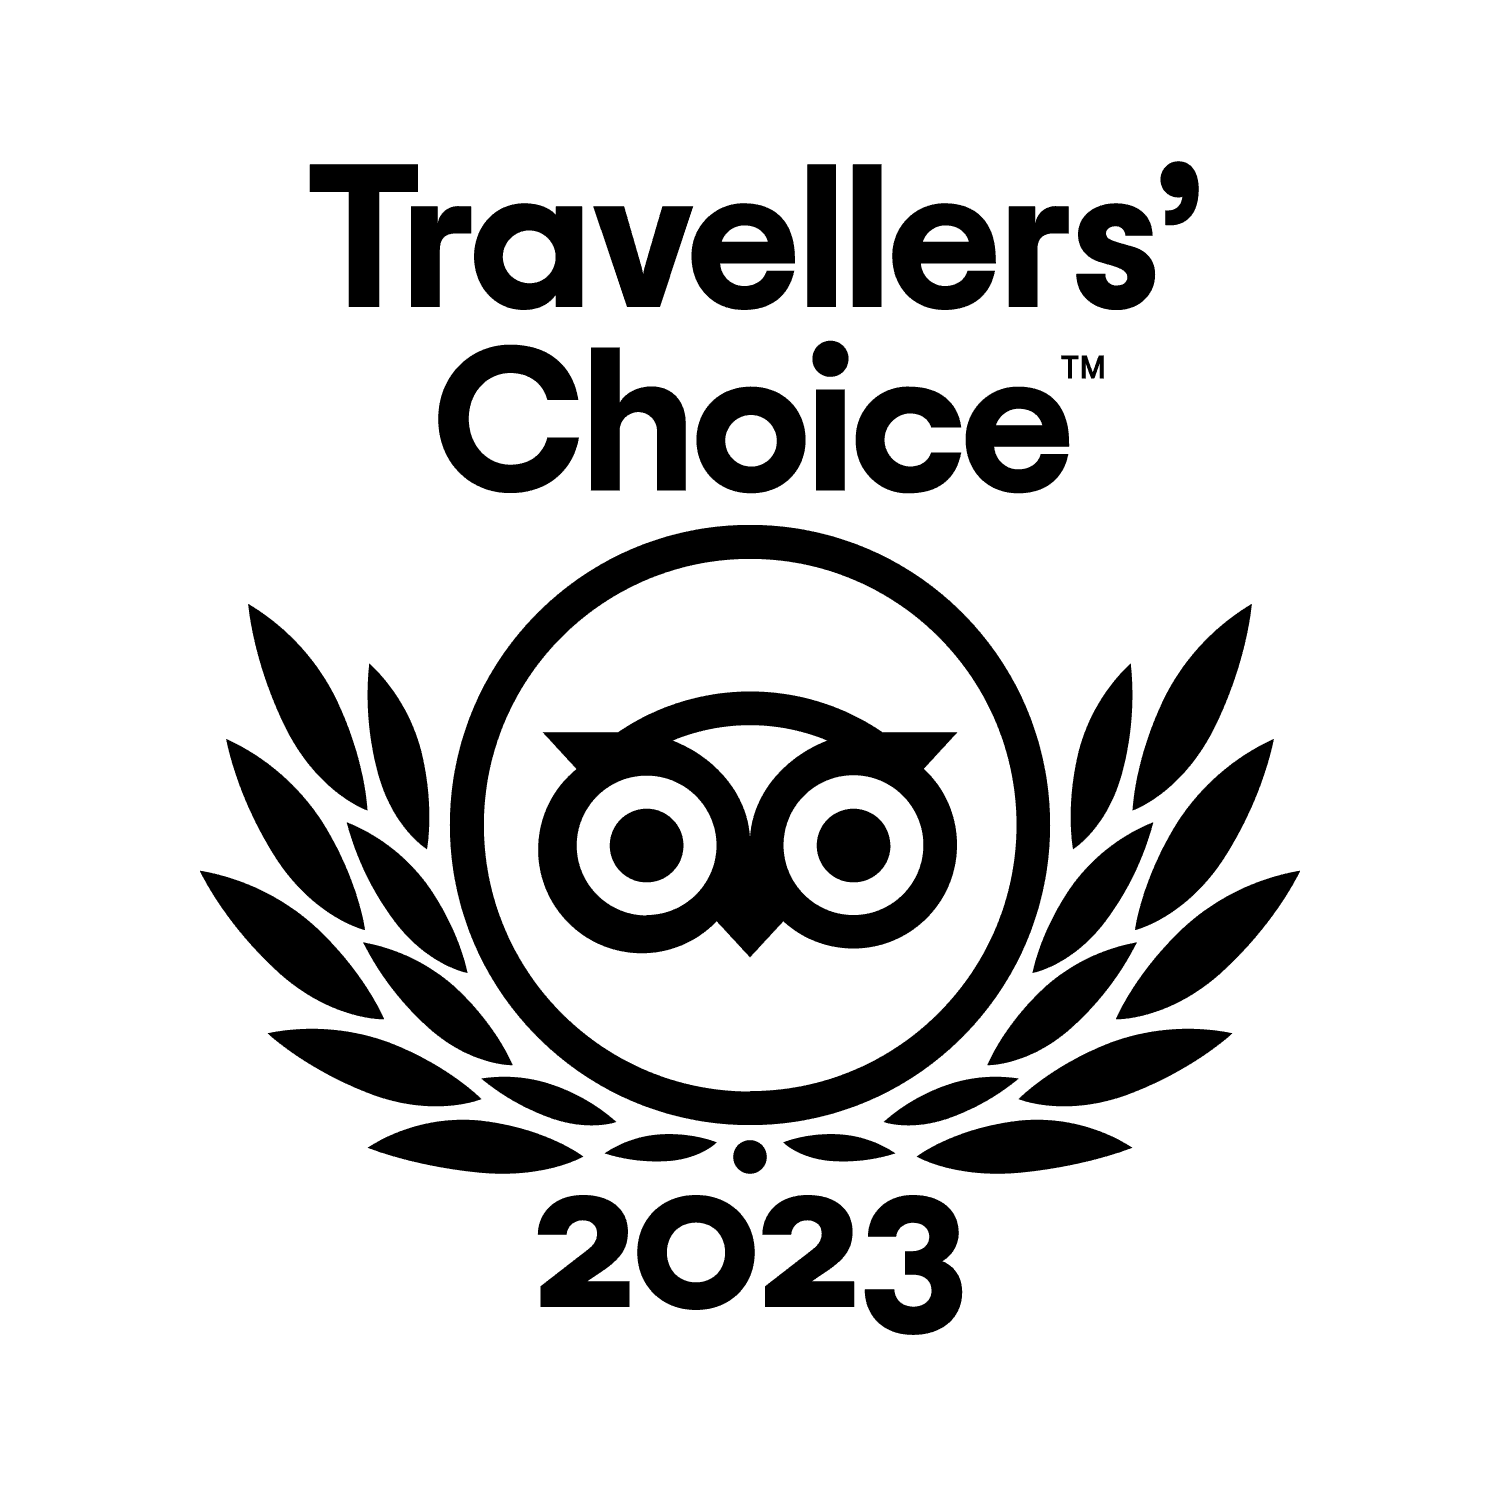 Travellers' Choice logo used at Manteo Resort Waterfront